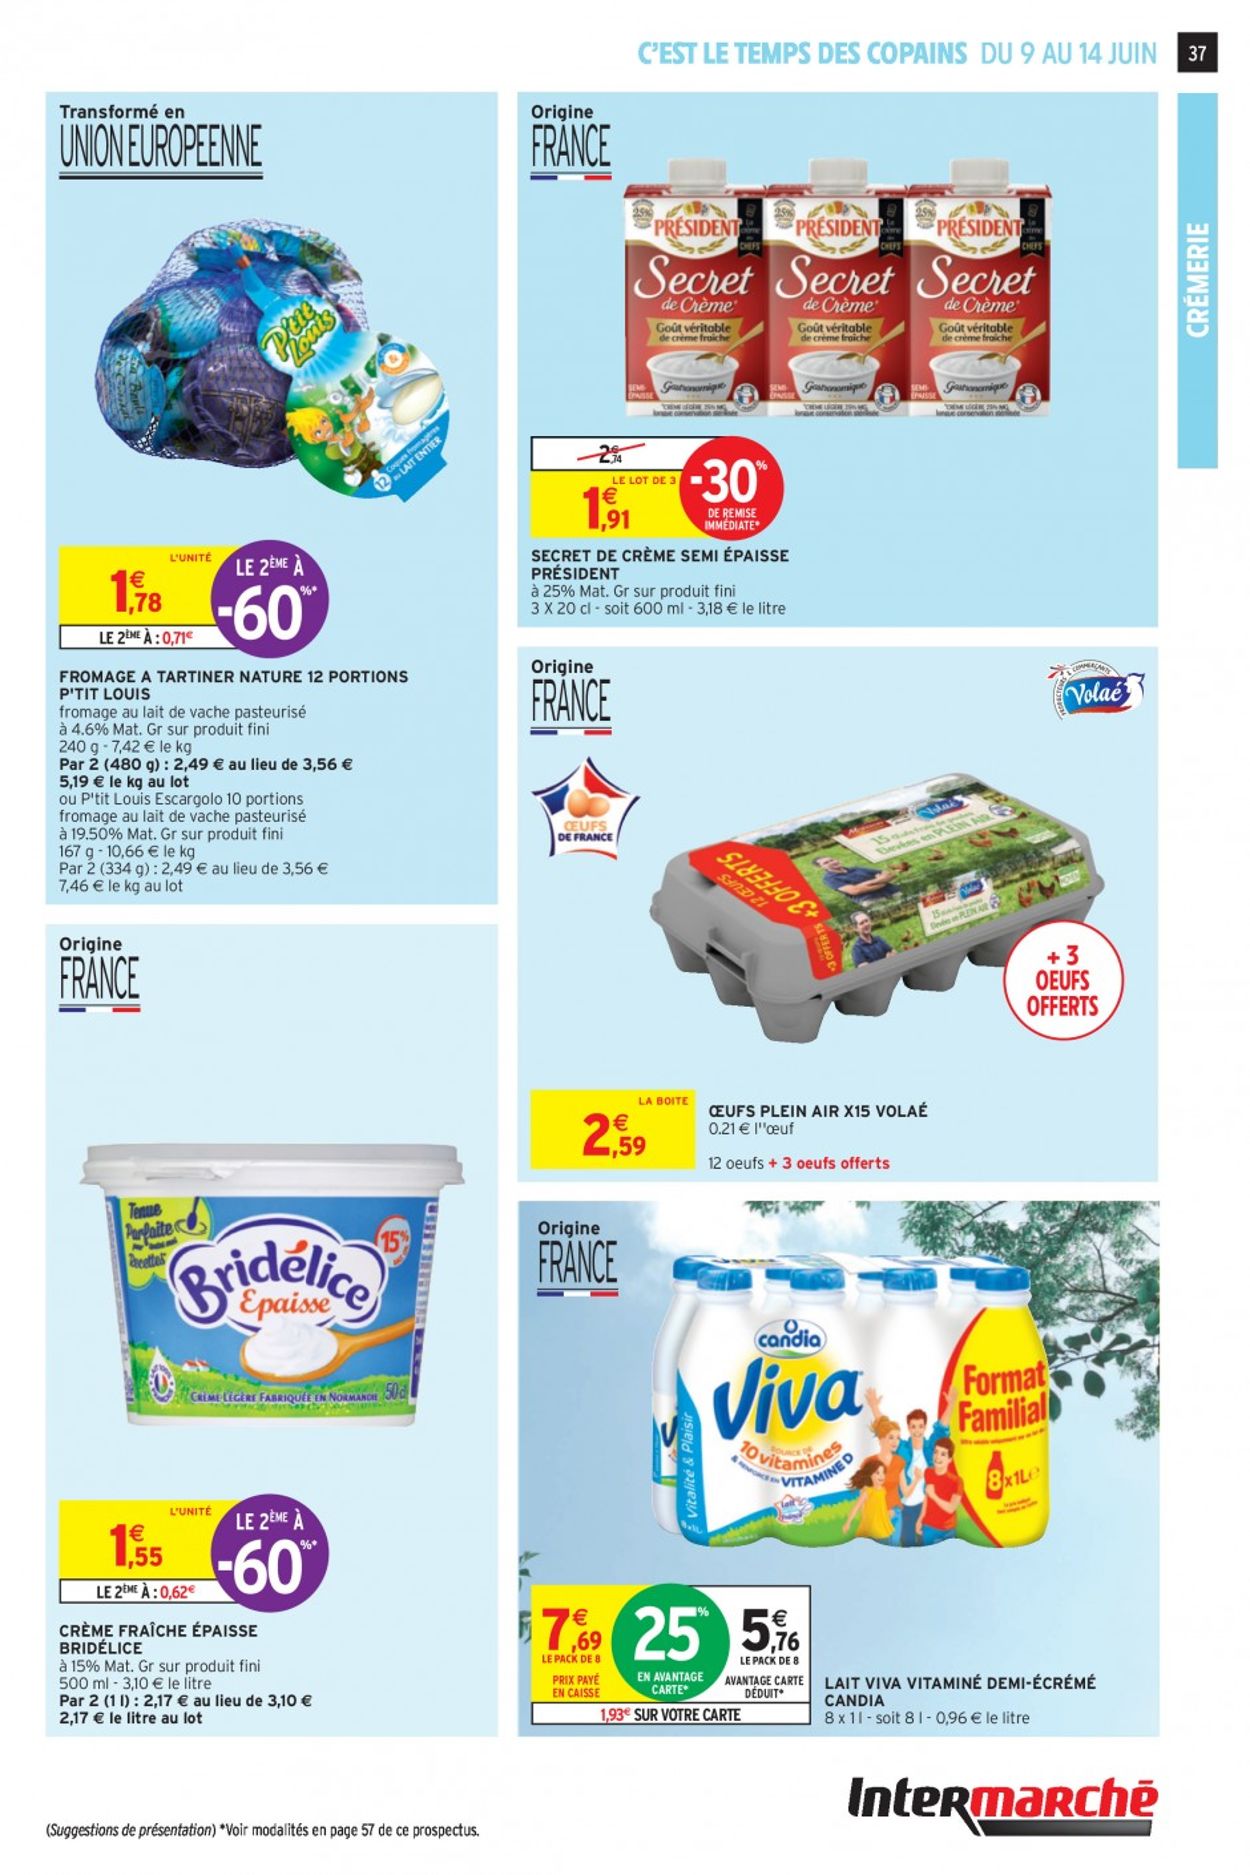 Intermarché Catalogue - 09.06-14.06.2020 (Page 37)